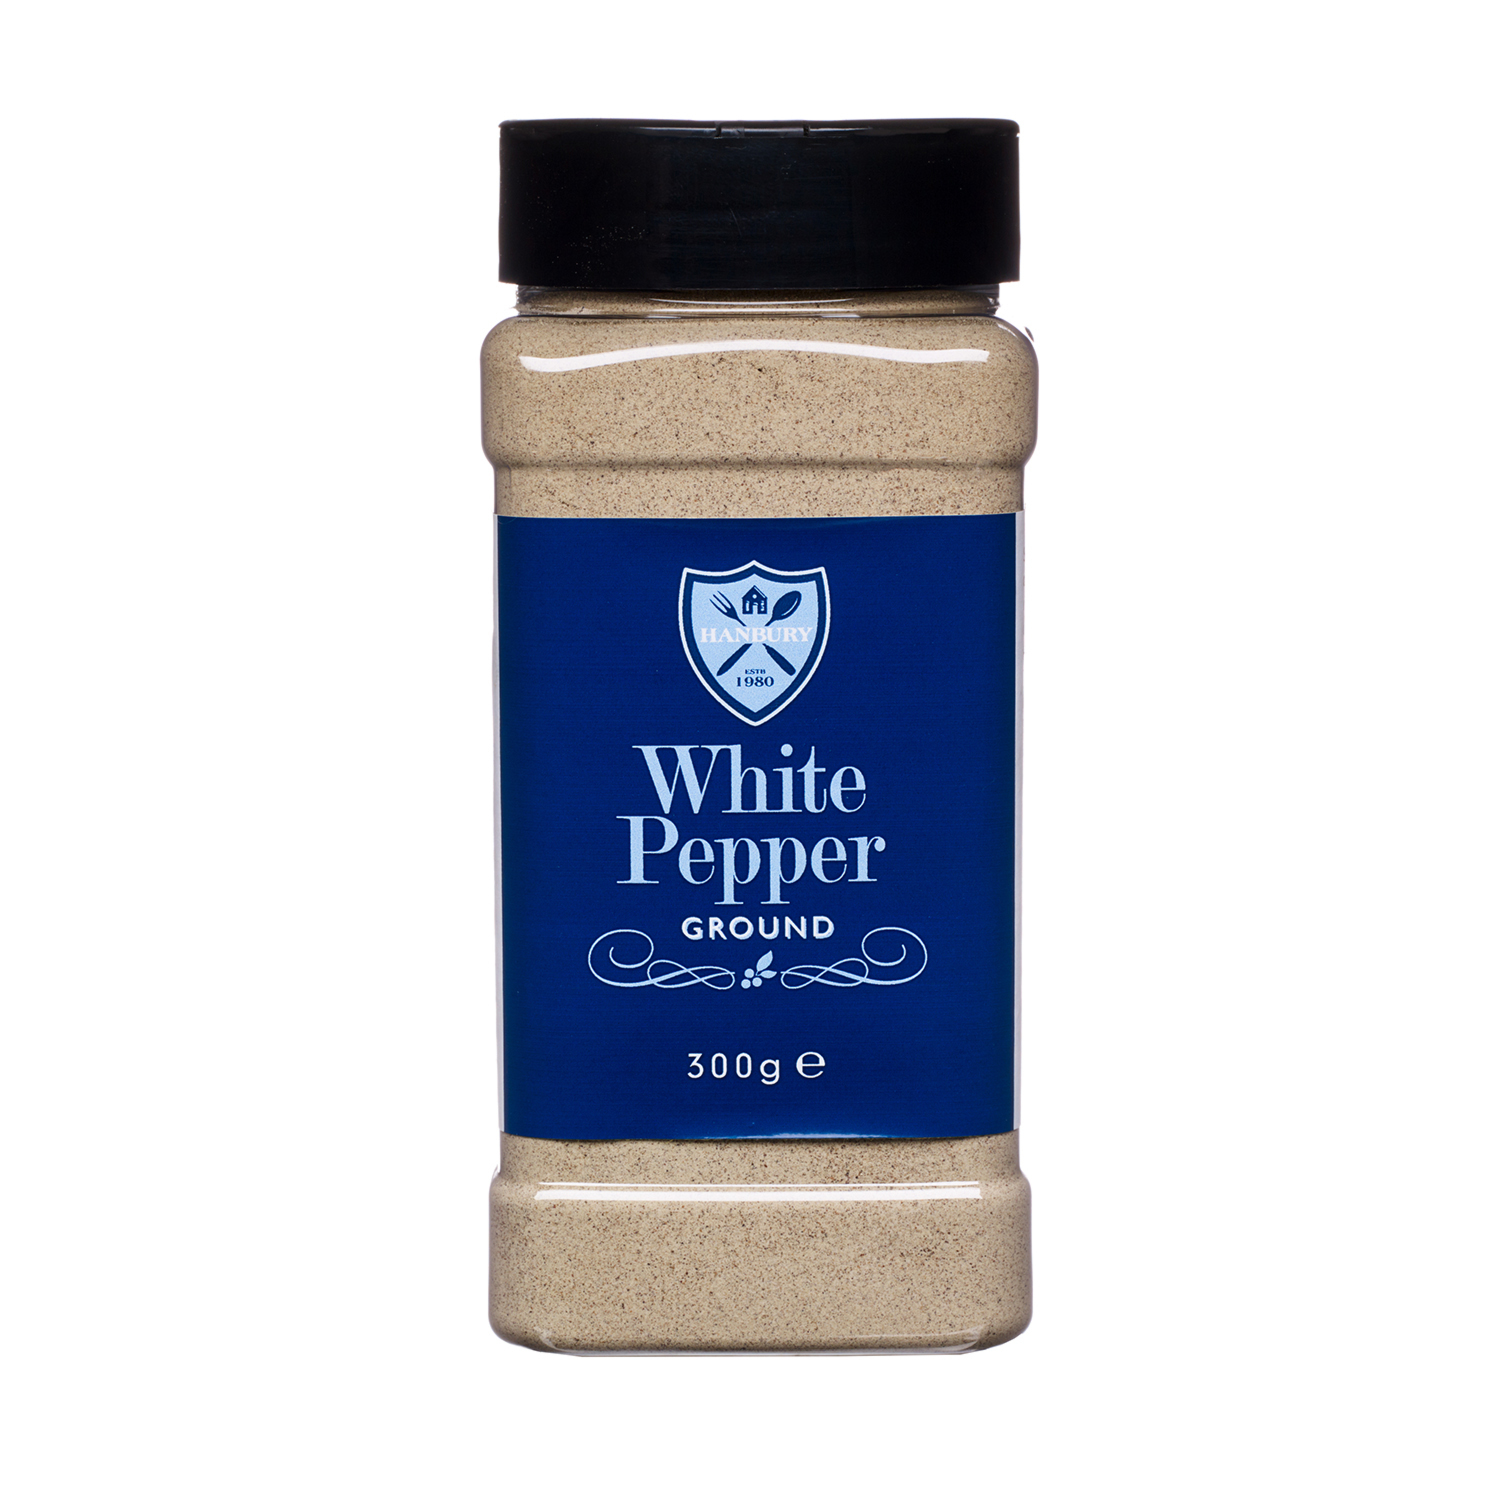 Ground White Pepper Image